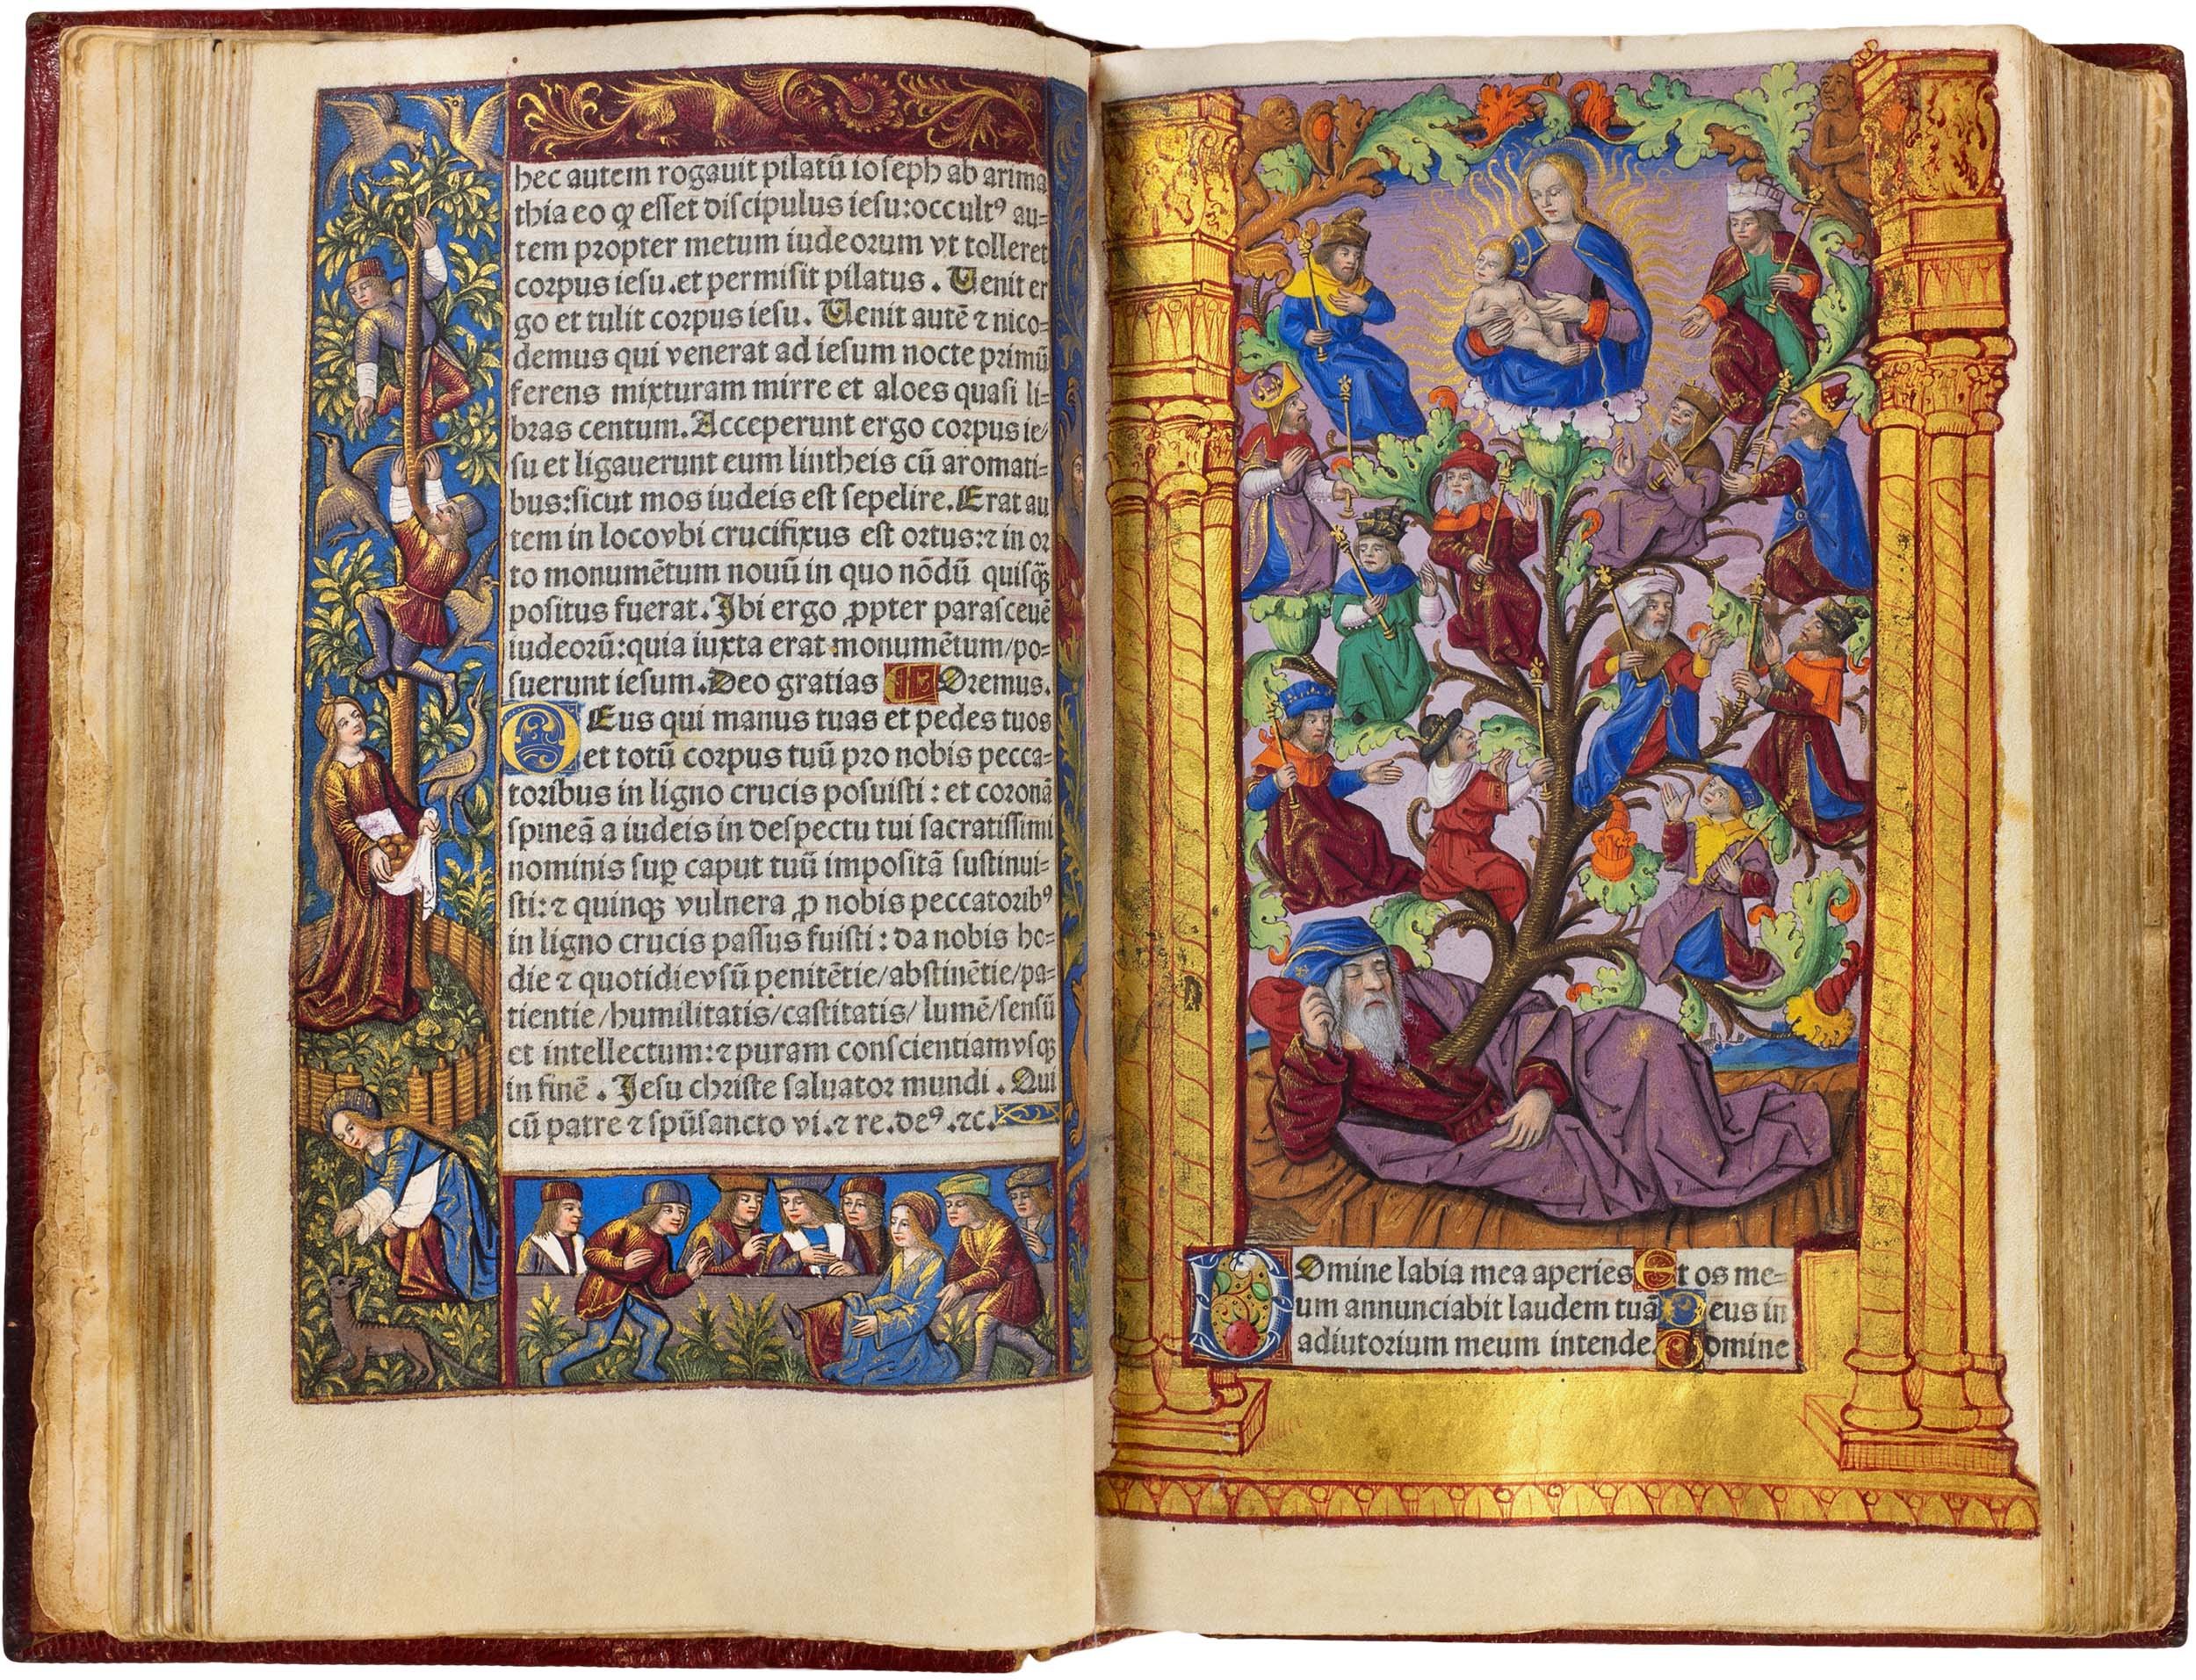 Horae-bmv-book-of-hours-Louis-XII-martainville-master-philippa-guelders-paris-pigouchet-vostre-15.10.1499-20.jpg